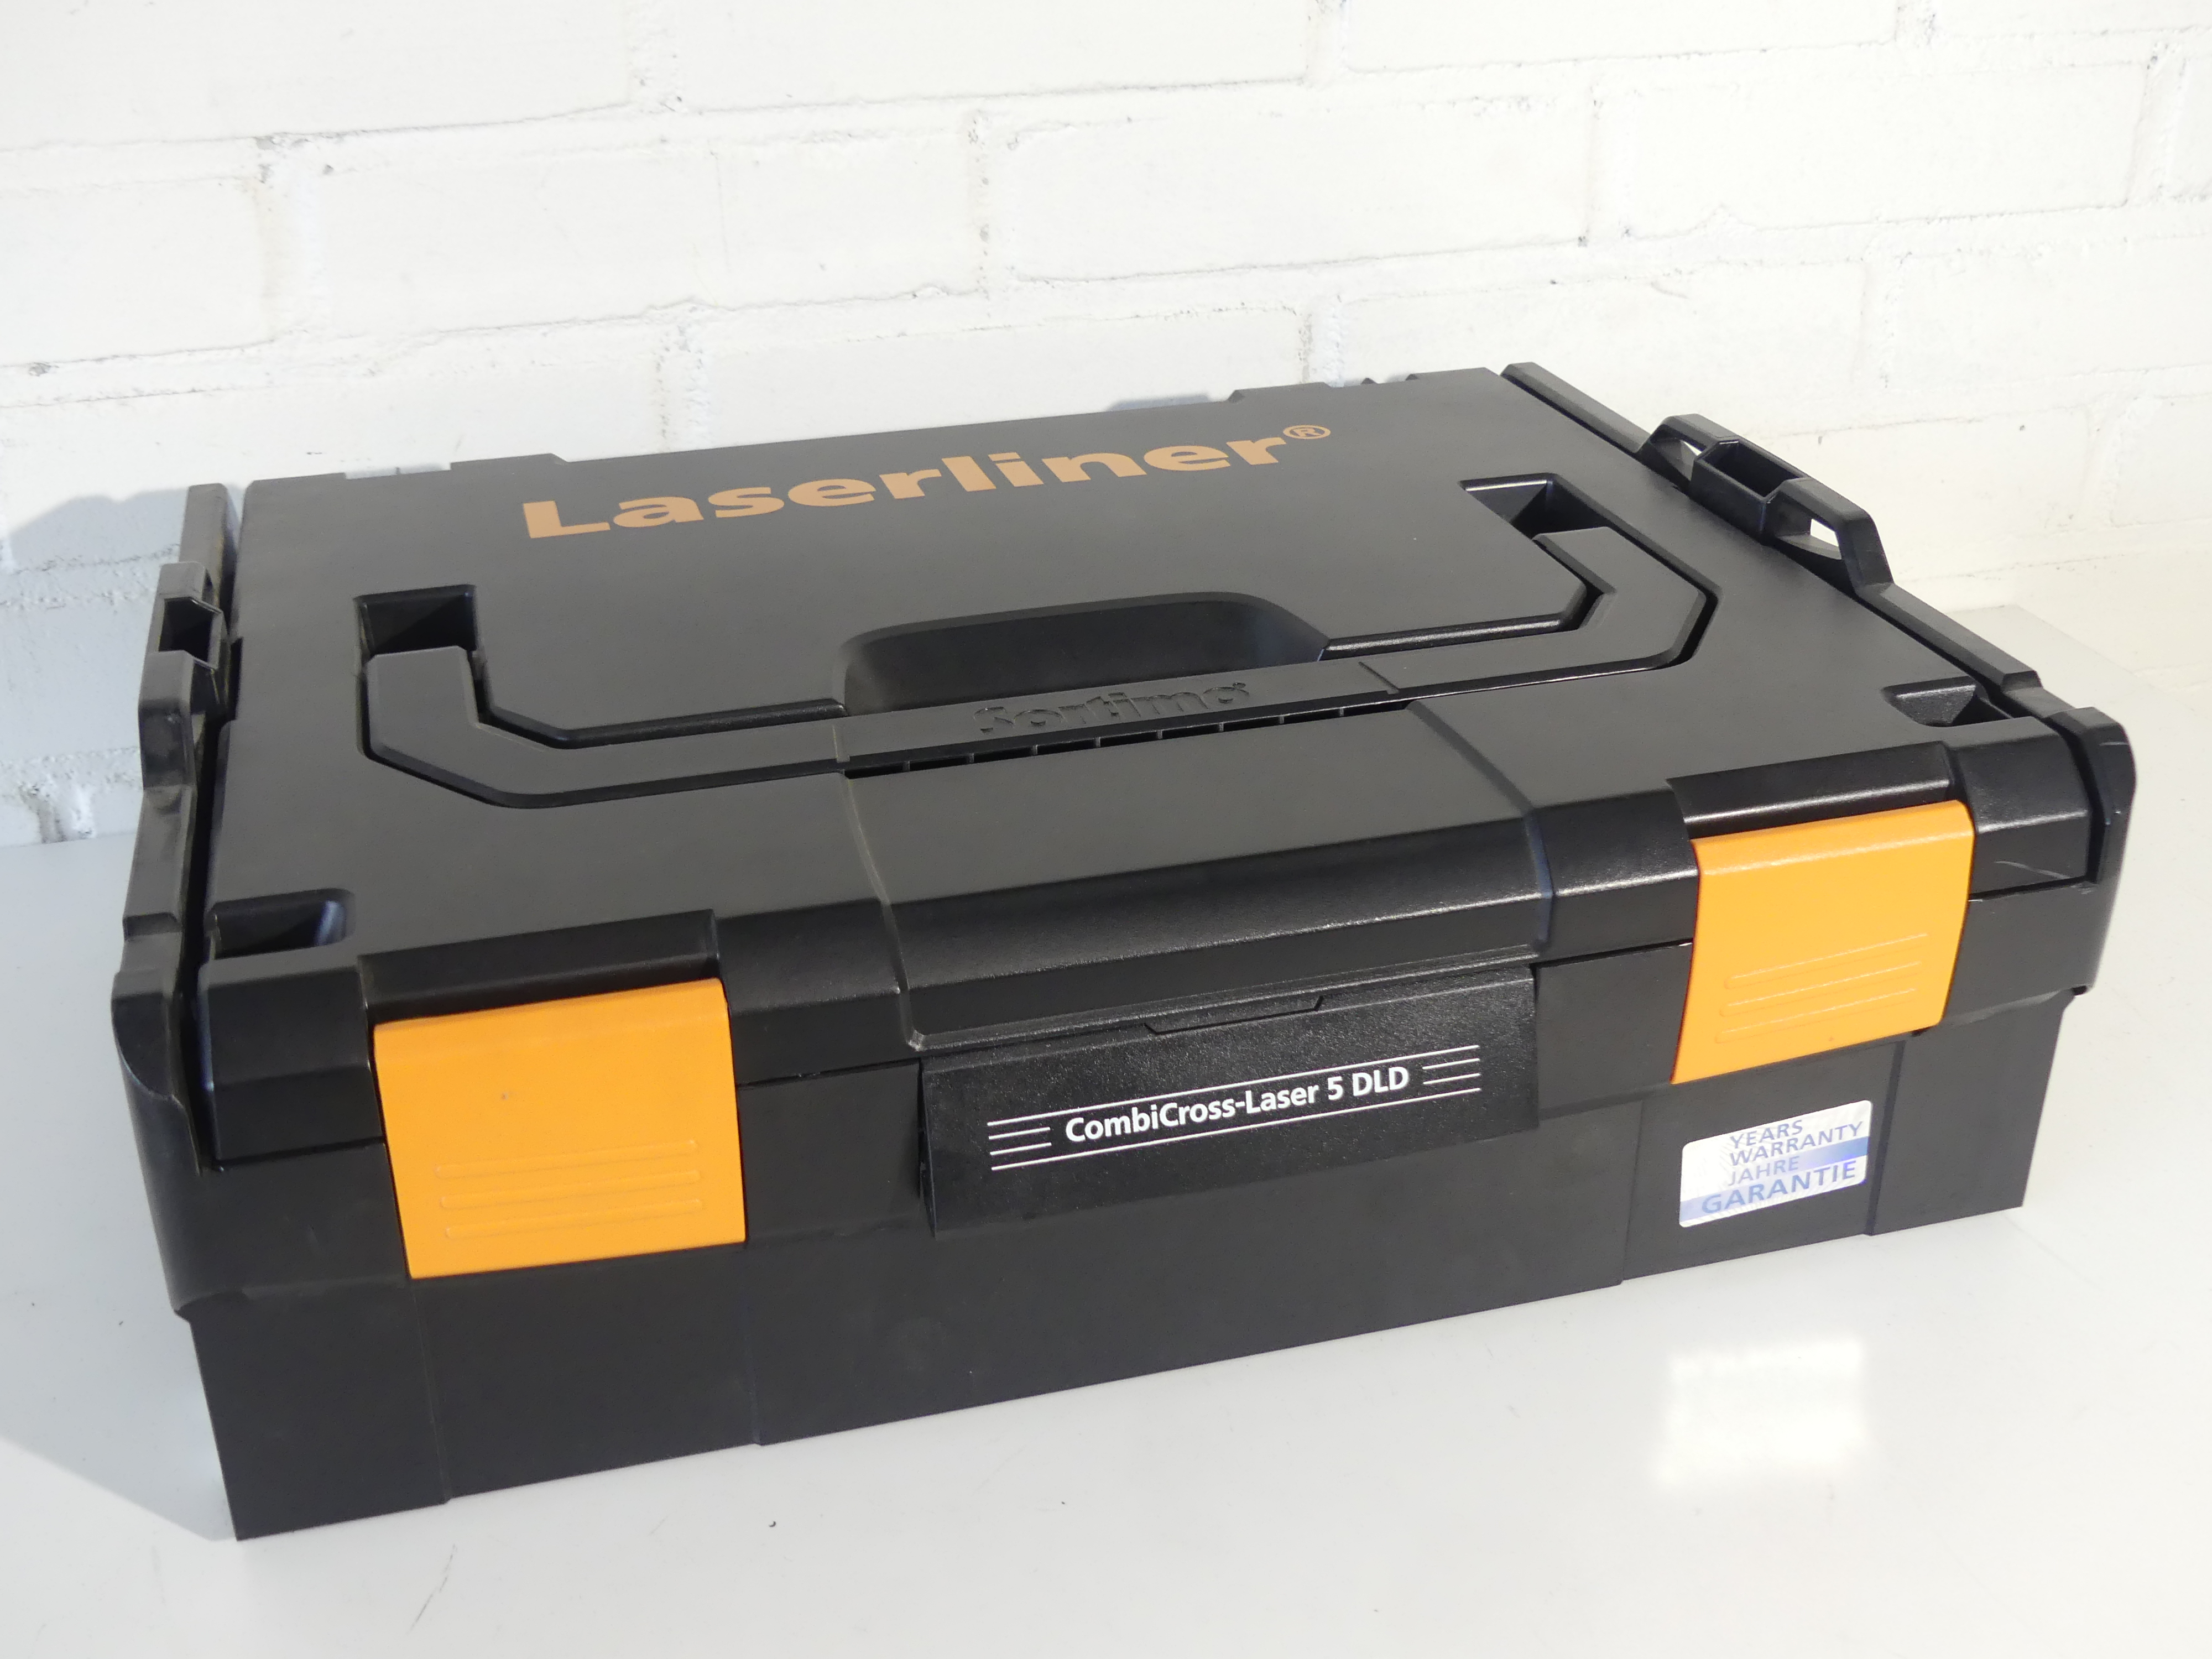 Laserliner CombiCross-Laser 5 DLD